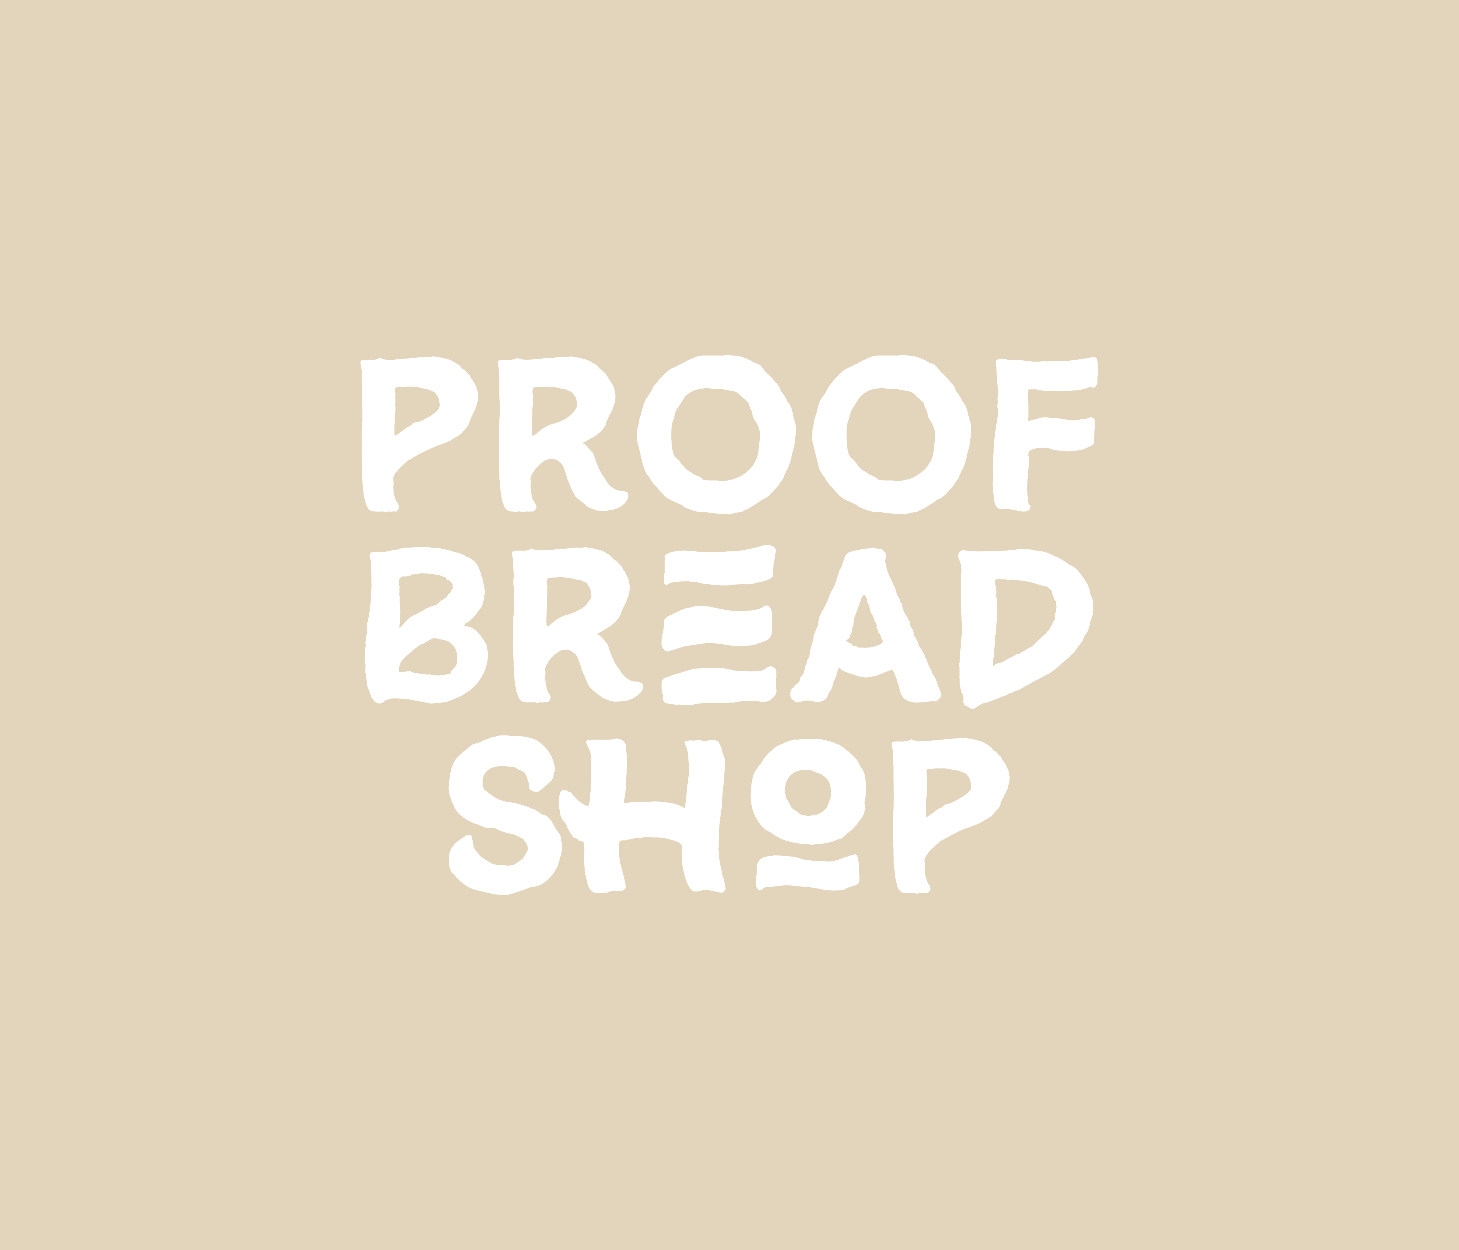 Proof Bread Shop